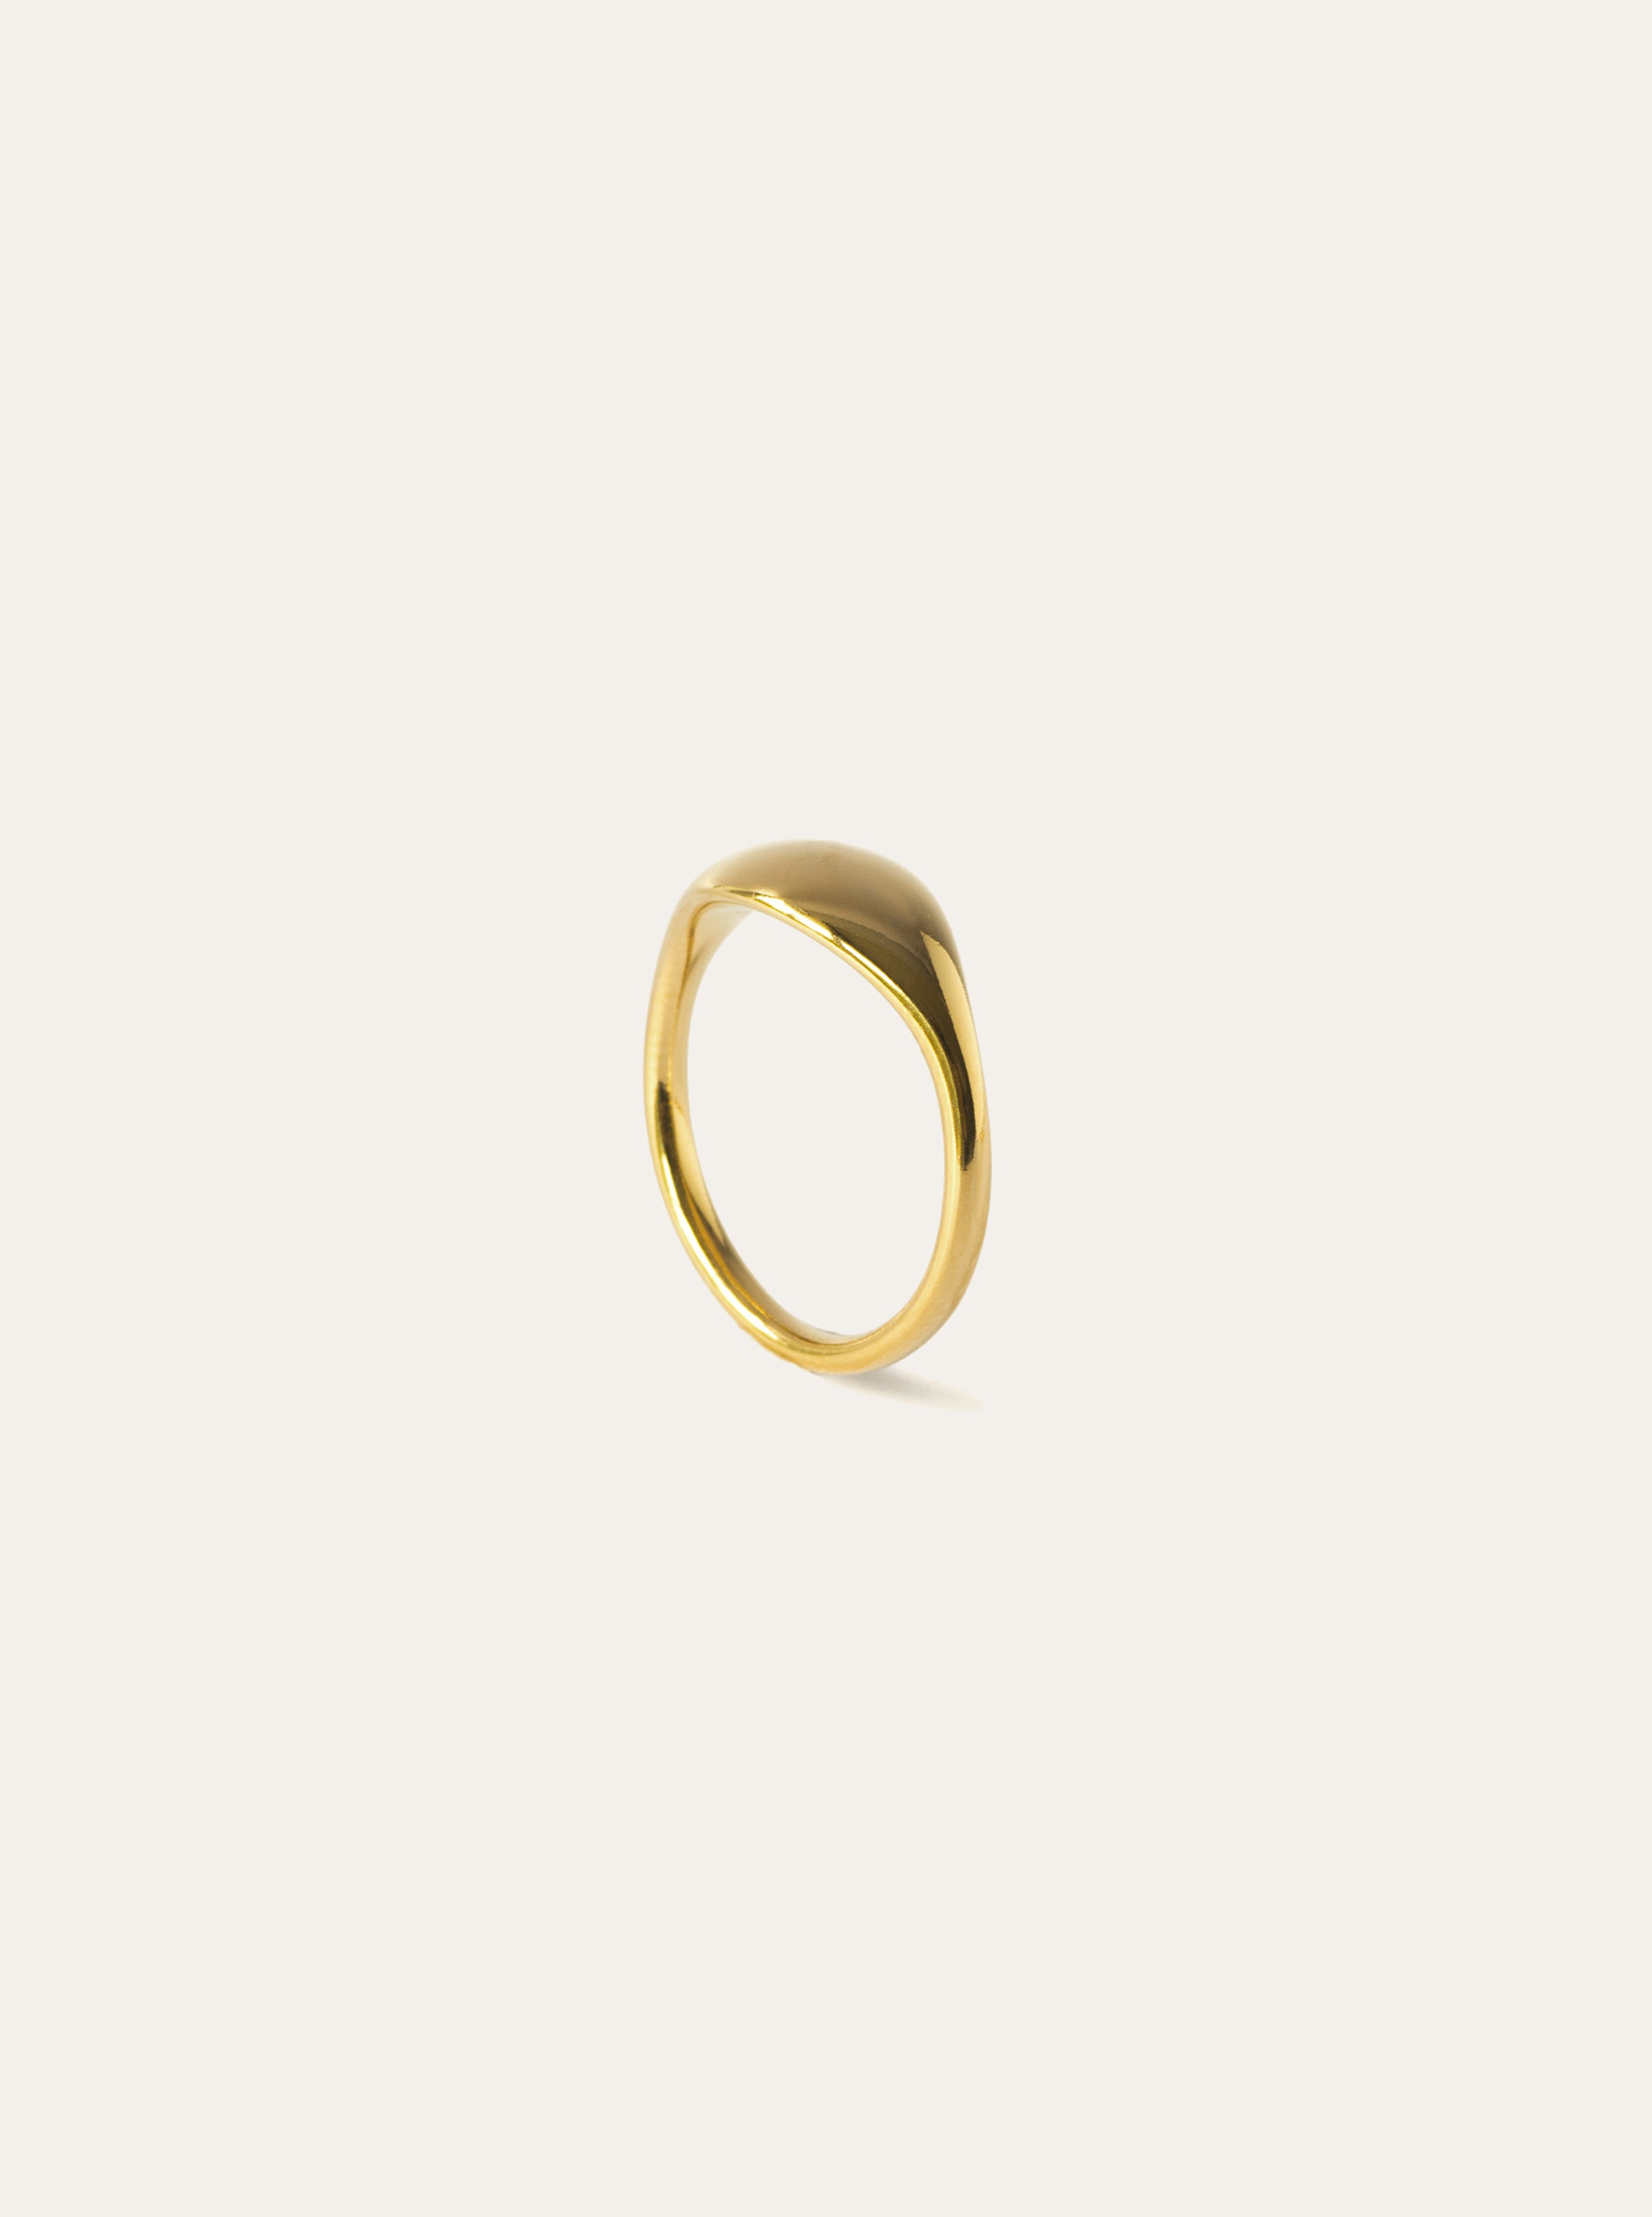 Round Tri-Diamond Ring in Yellow, Rose or White Gold